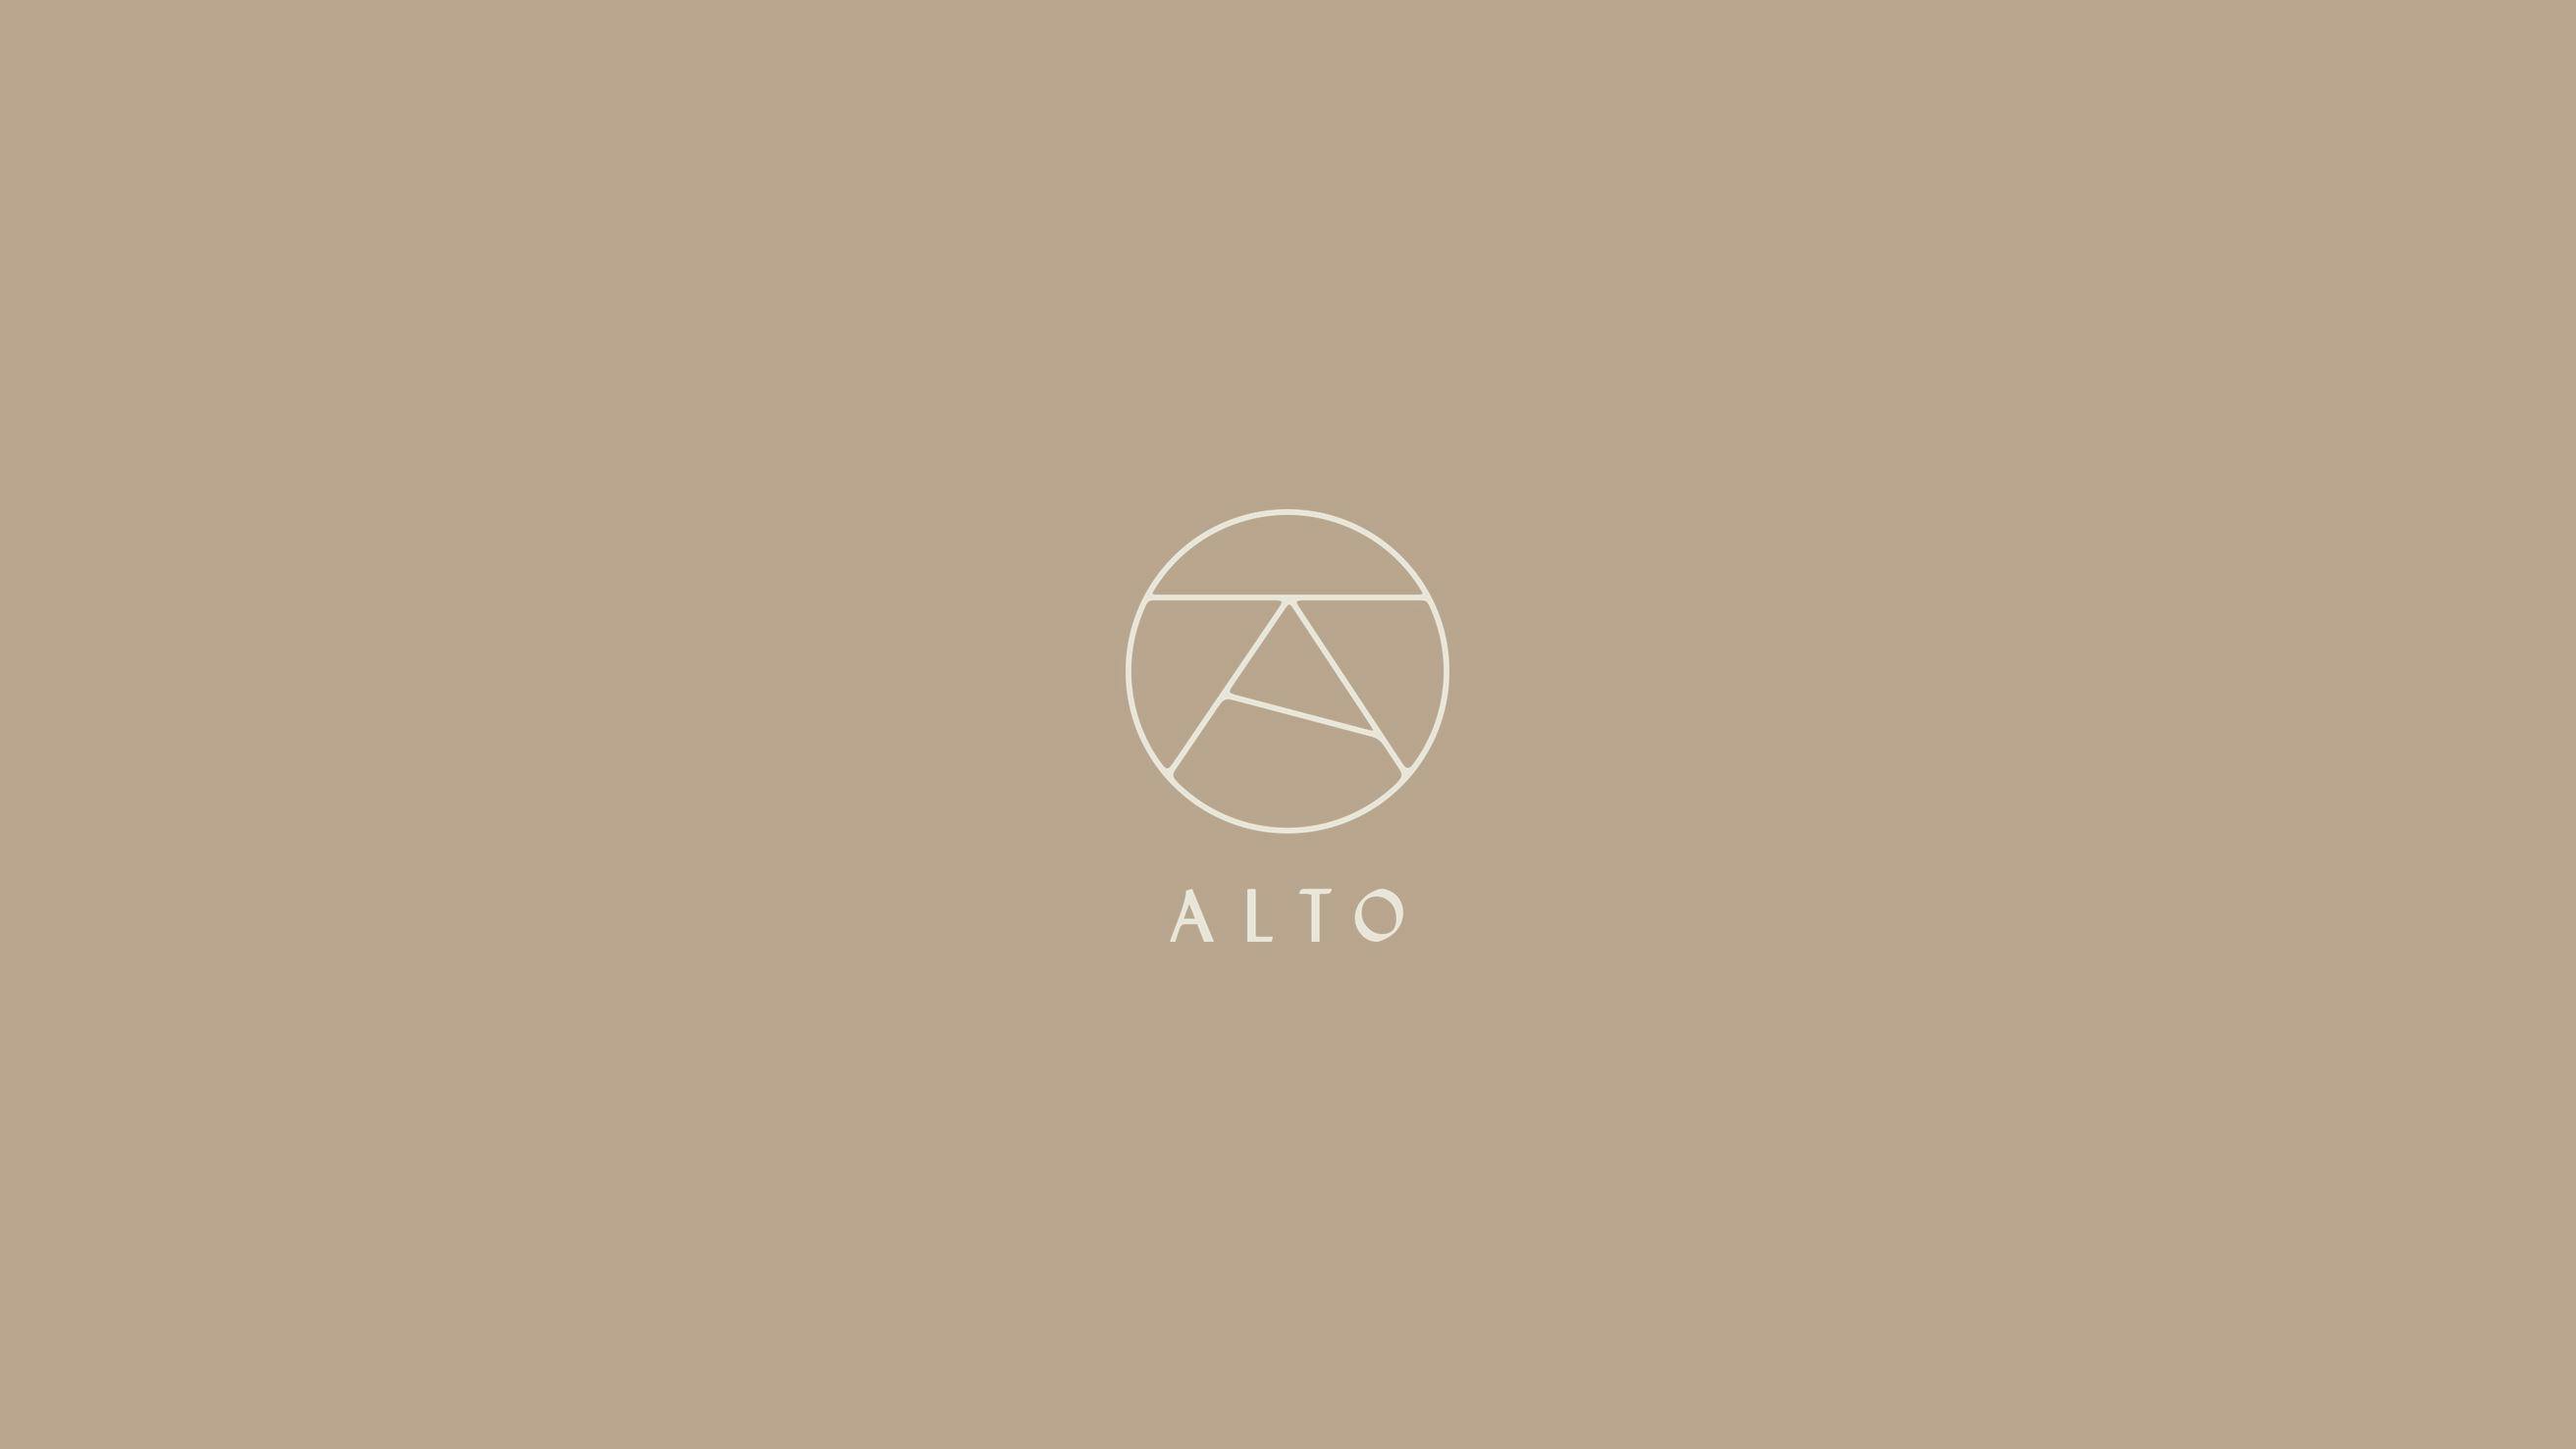 Alto brand development by The Uptown Agency